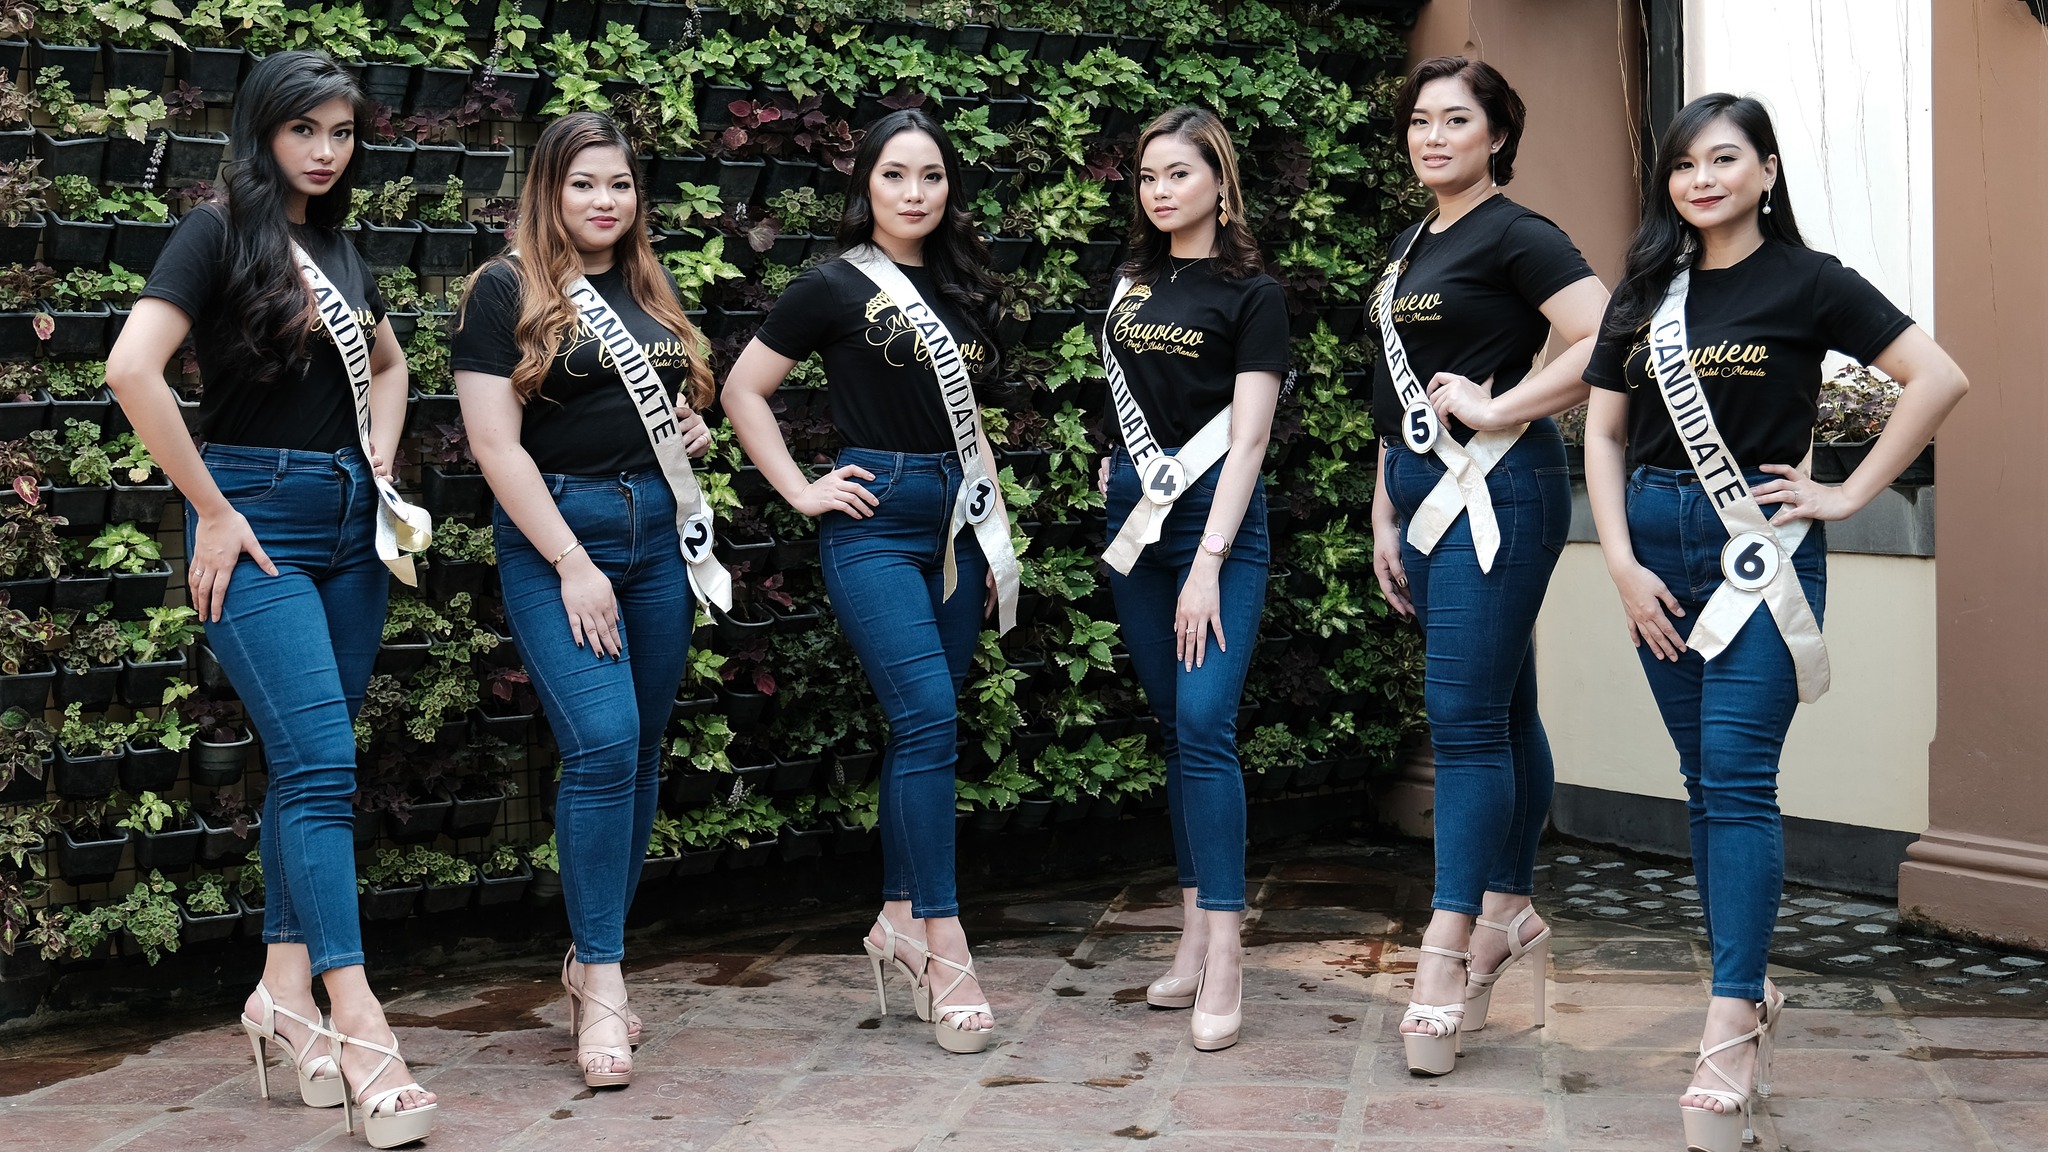 Ms. Bayview Park Hotel Manila 2022 contestants